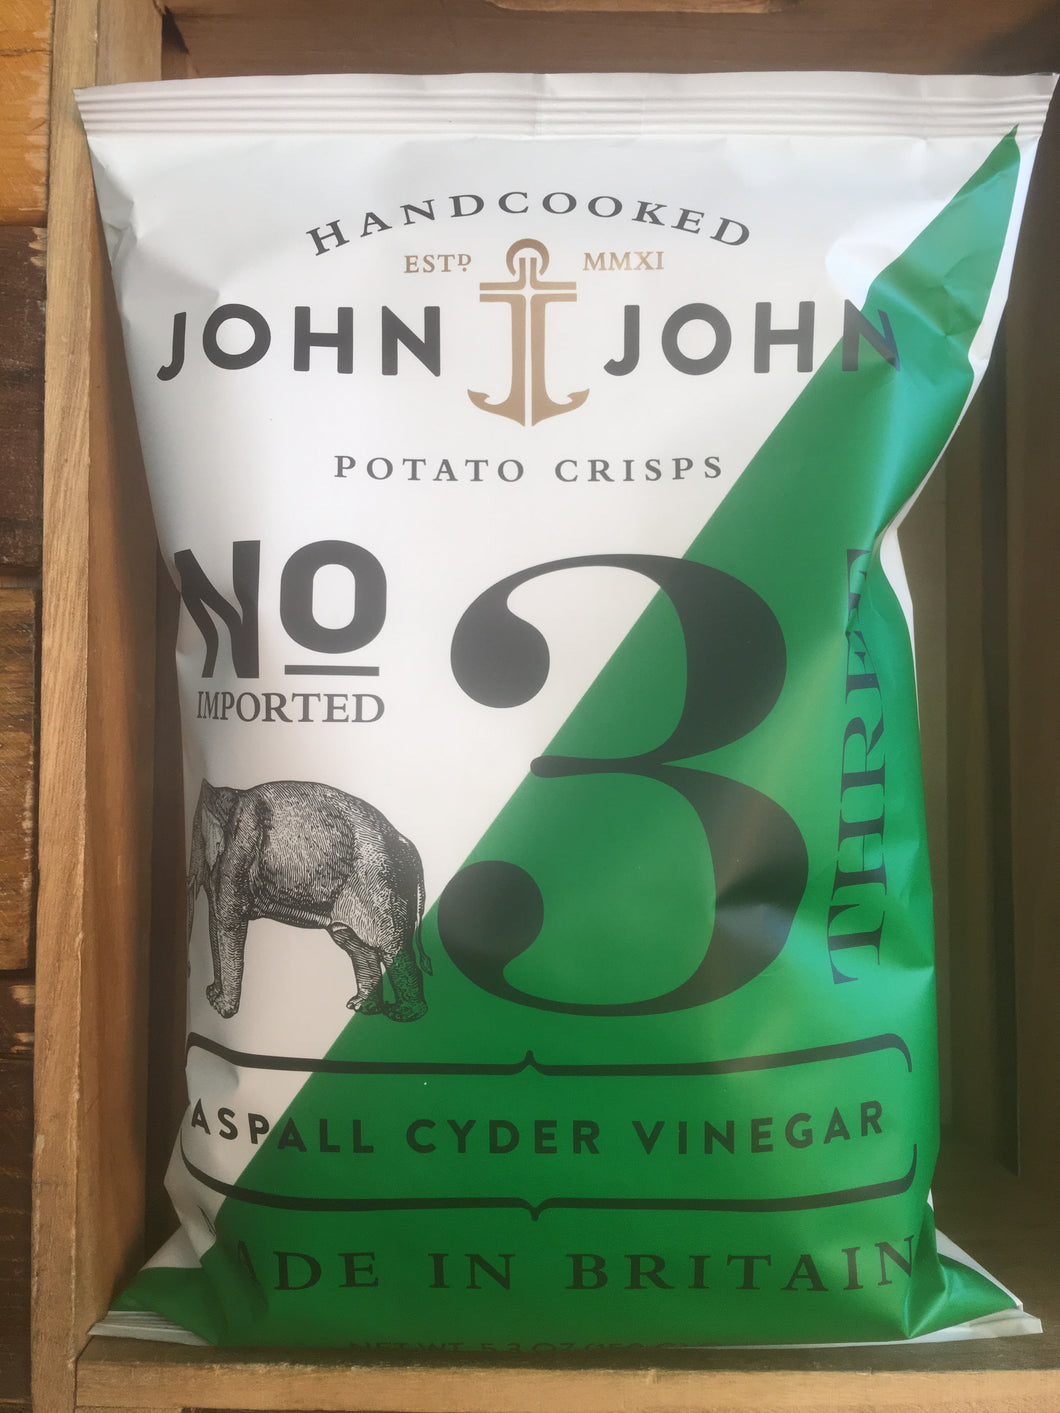 John John Aspall Cyder Vinegar Sharing Bag Crisps 150g